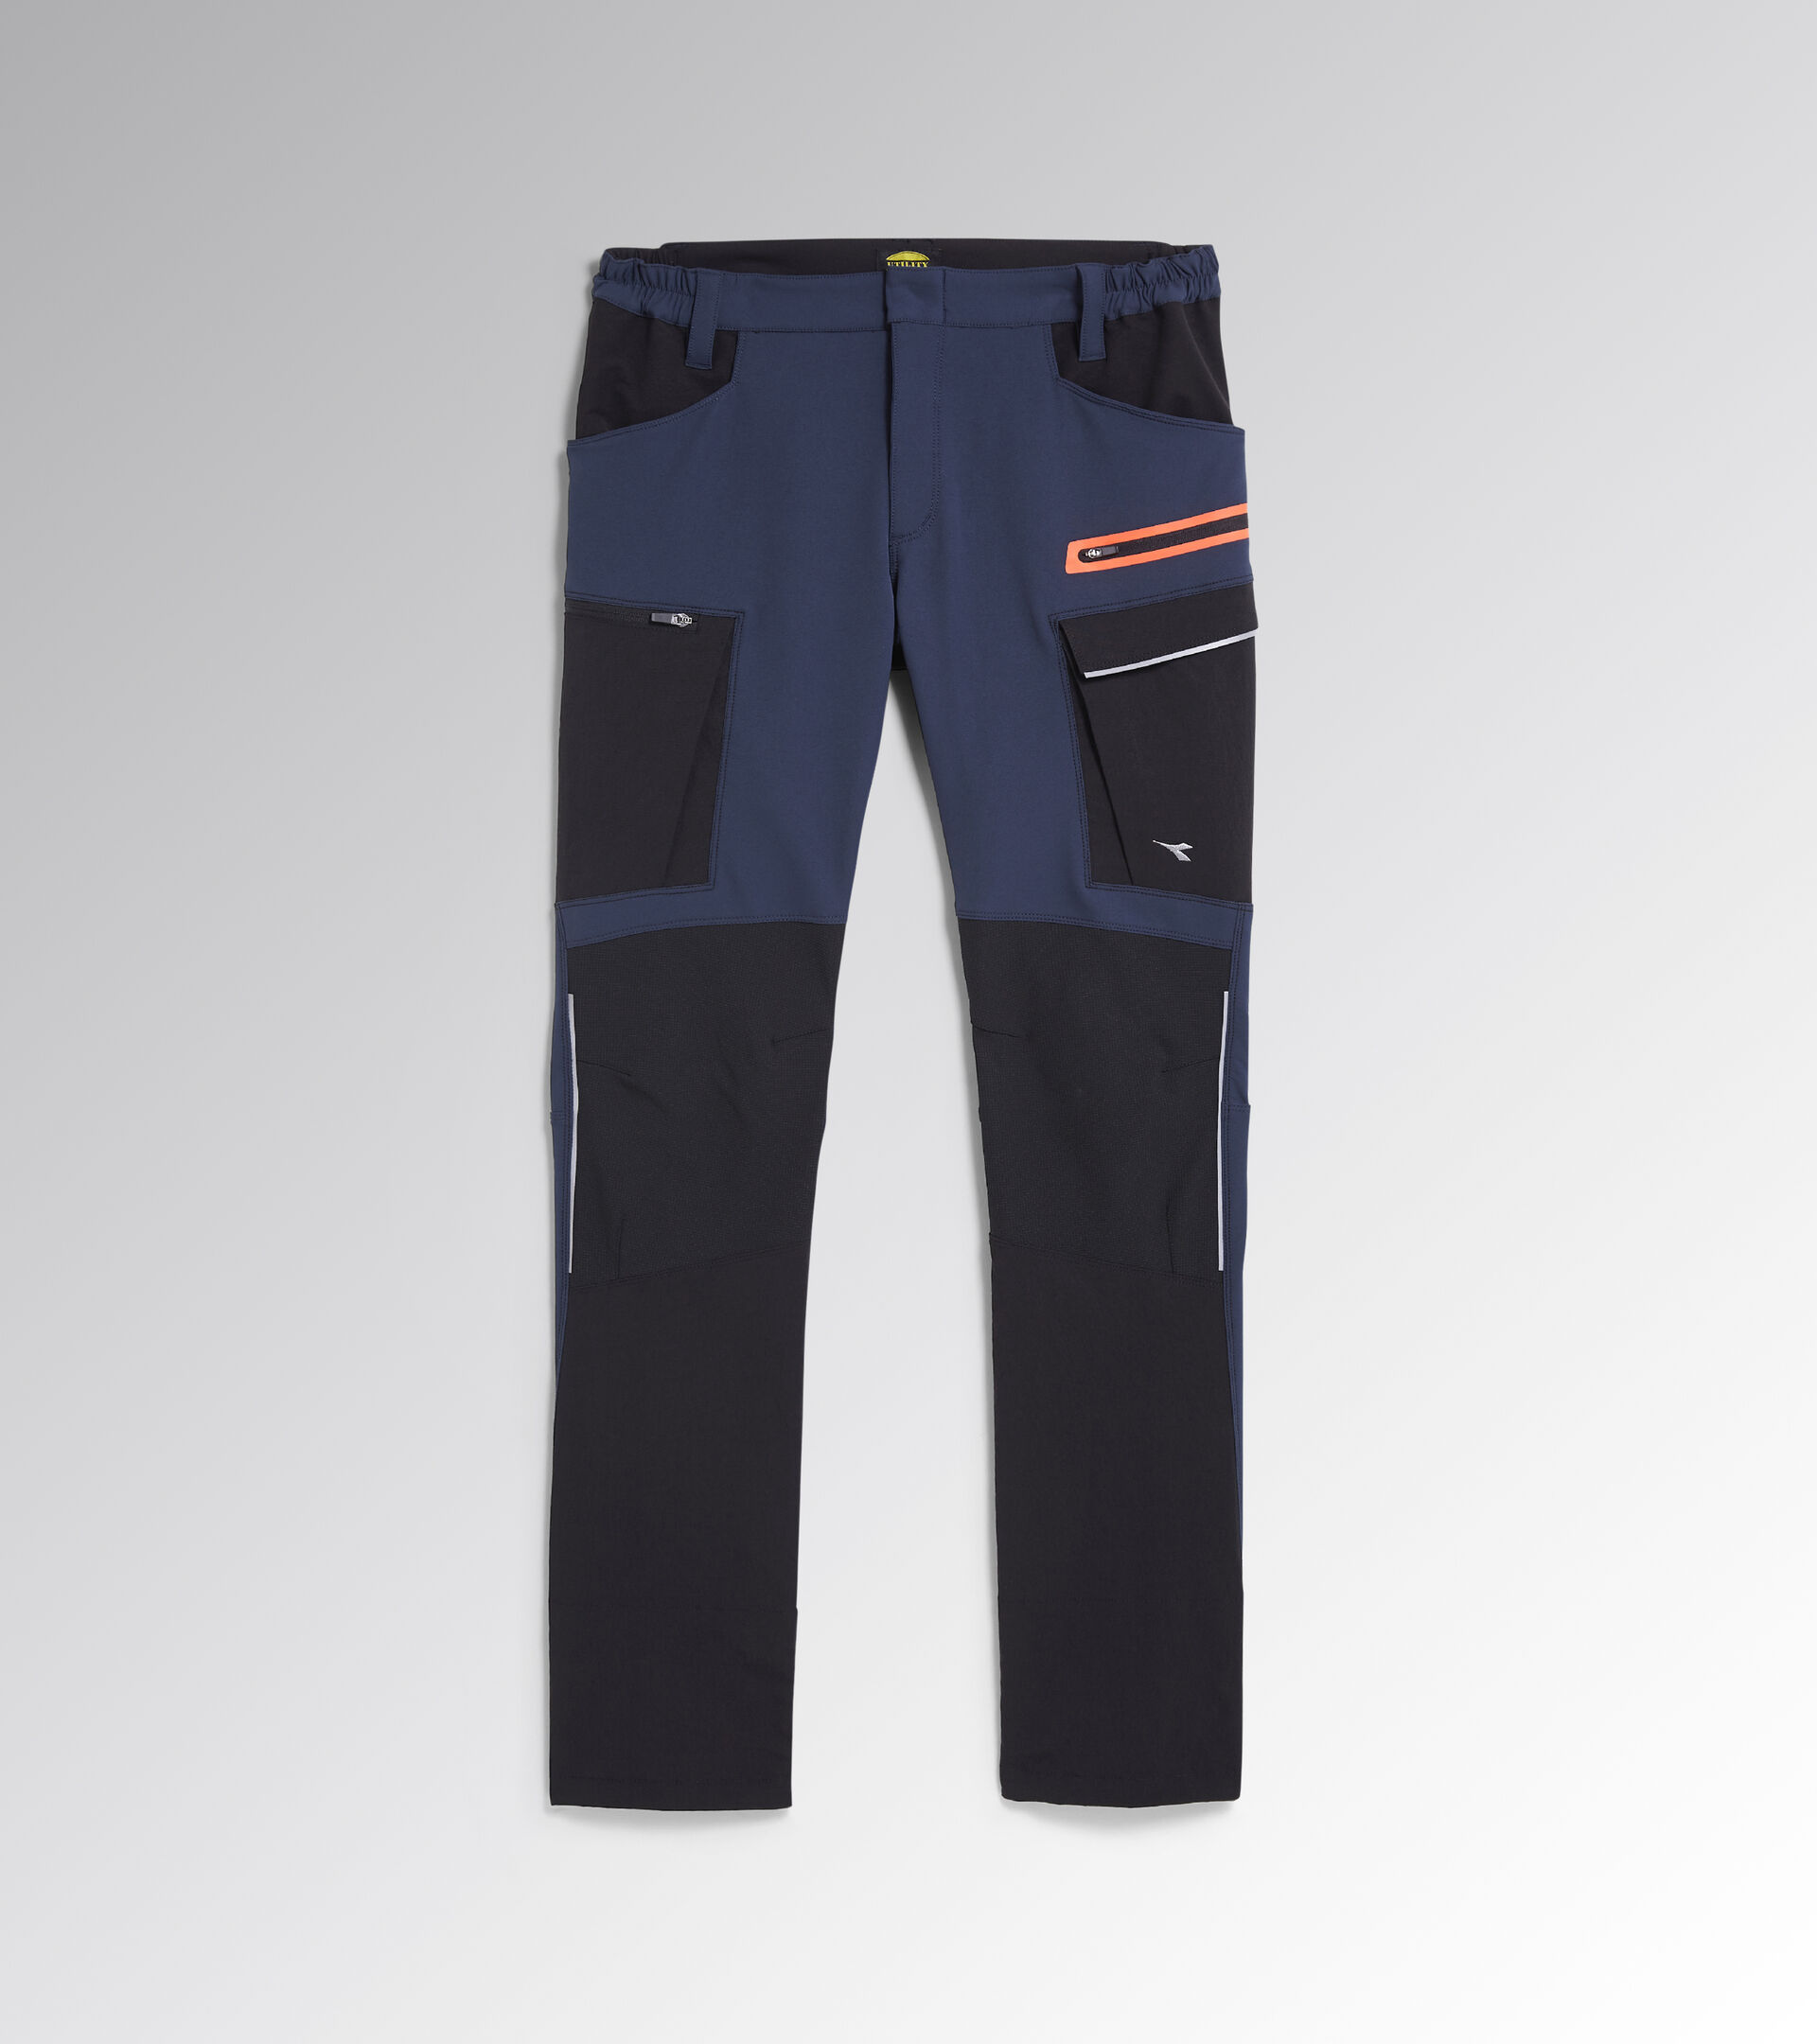 Pantalon de travail PANT HYBRID CARGO NOIR/BLEU NUITS - Utility